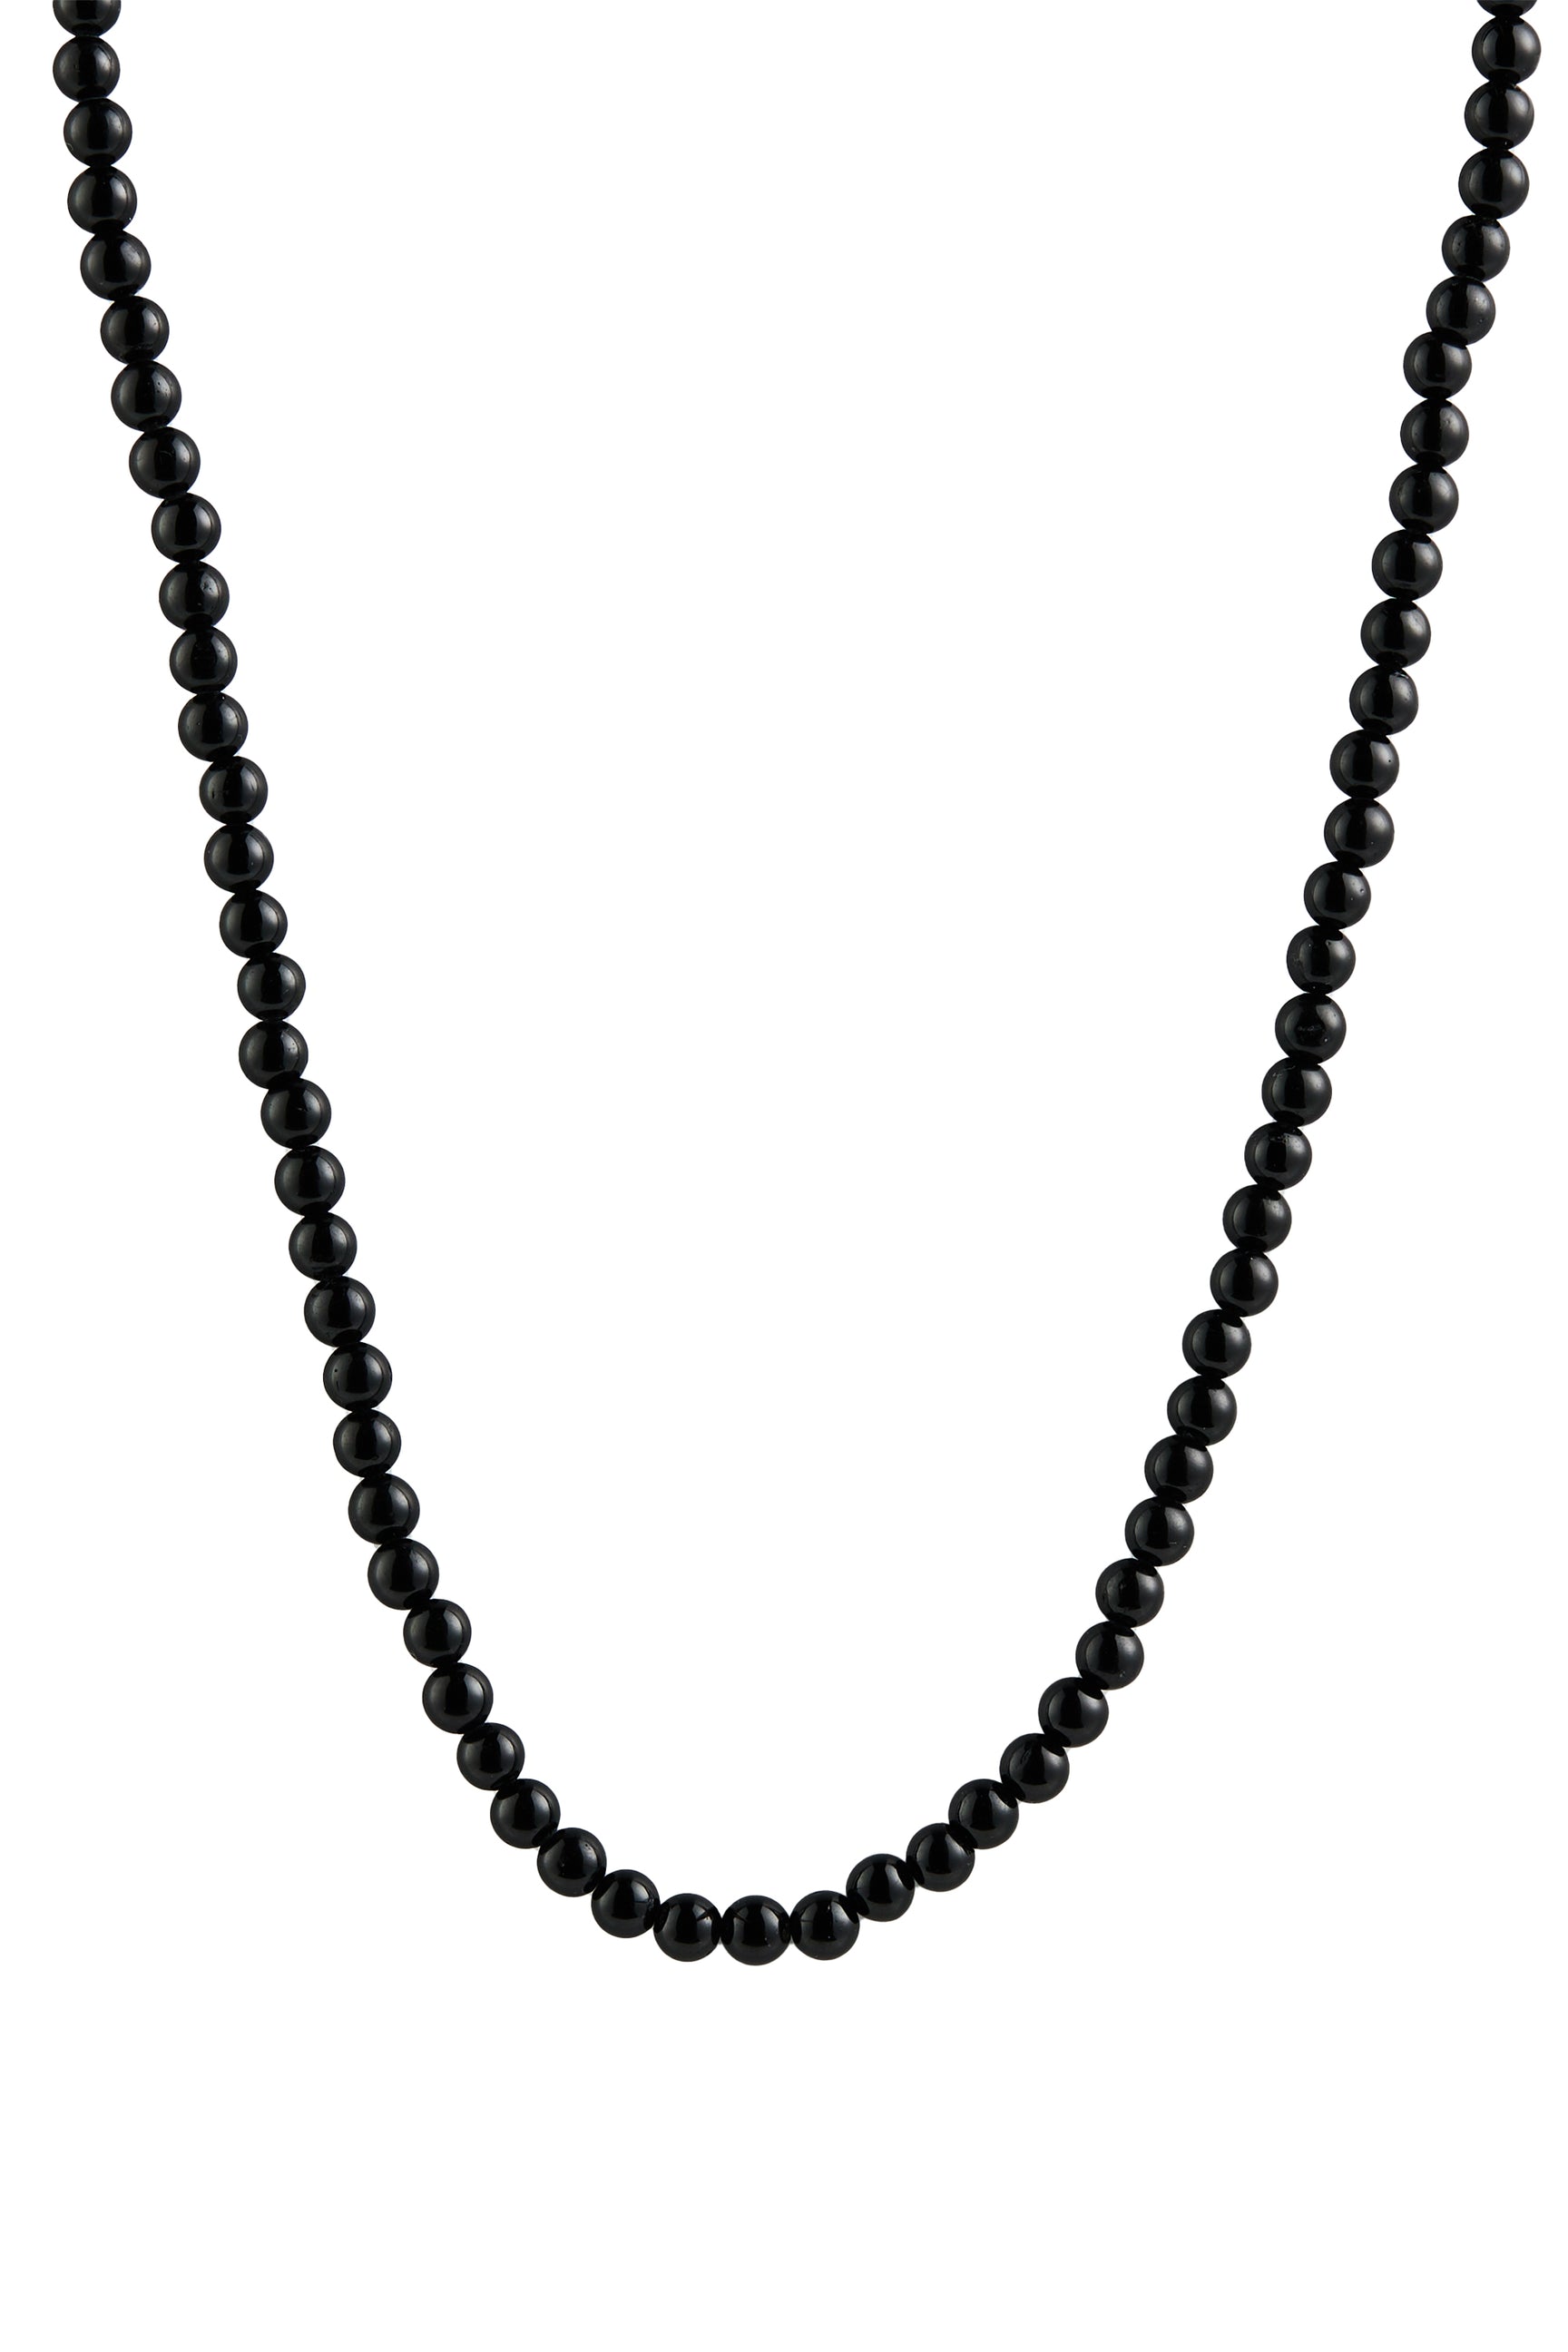 Petite Boule Necklace Black Tourmaline